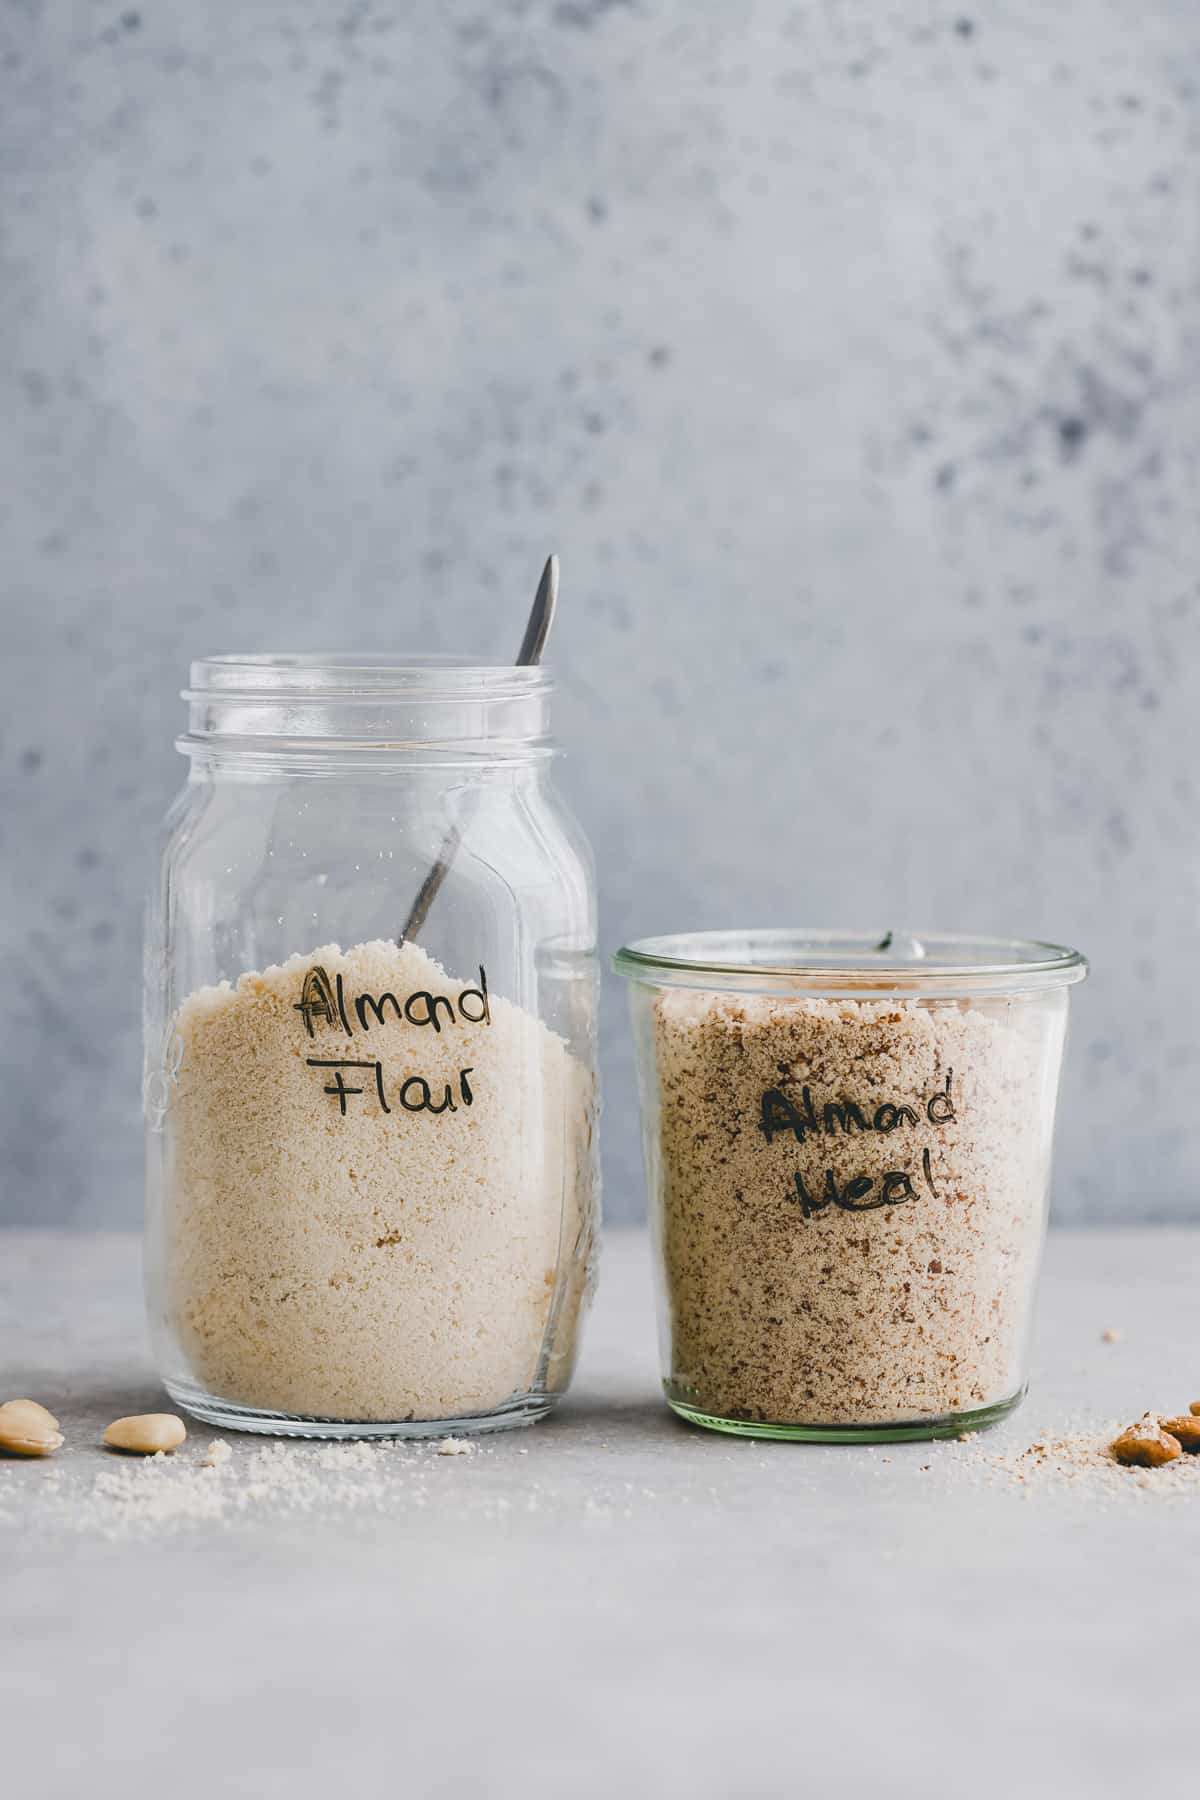 almond flour vs almond meal